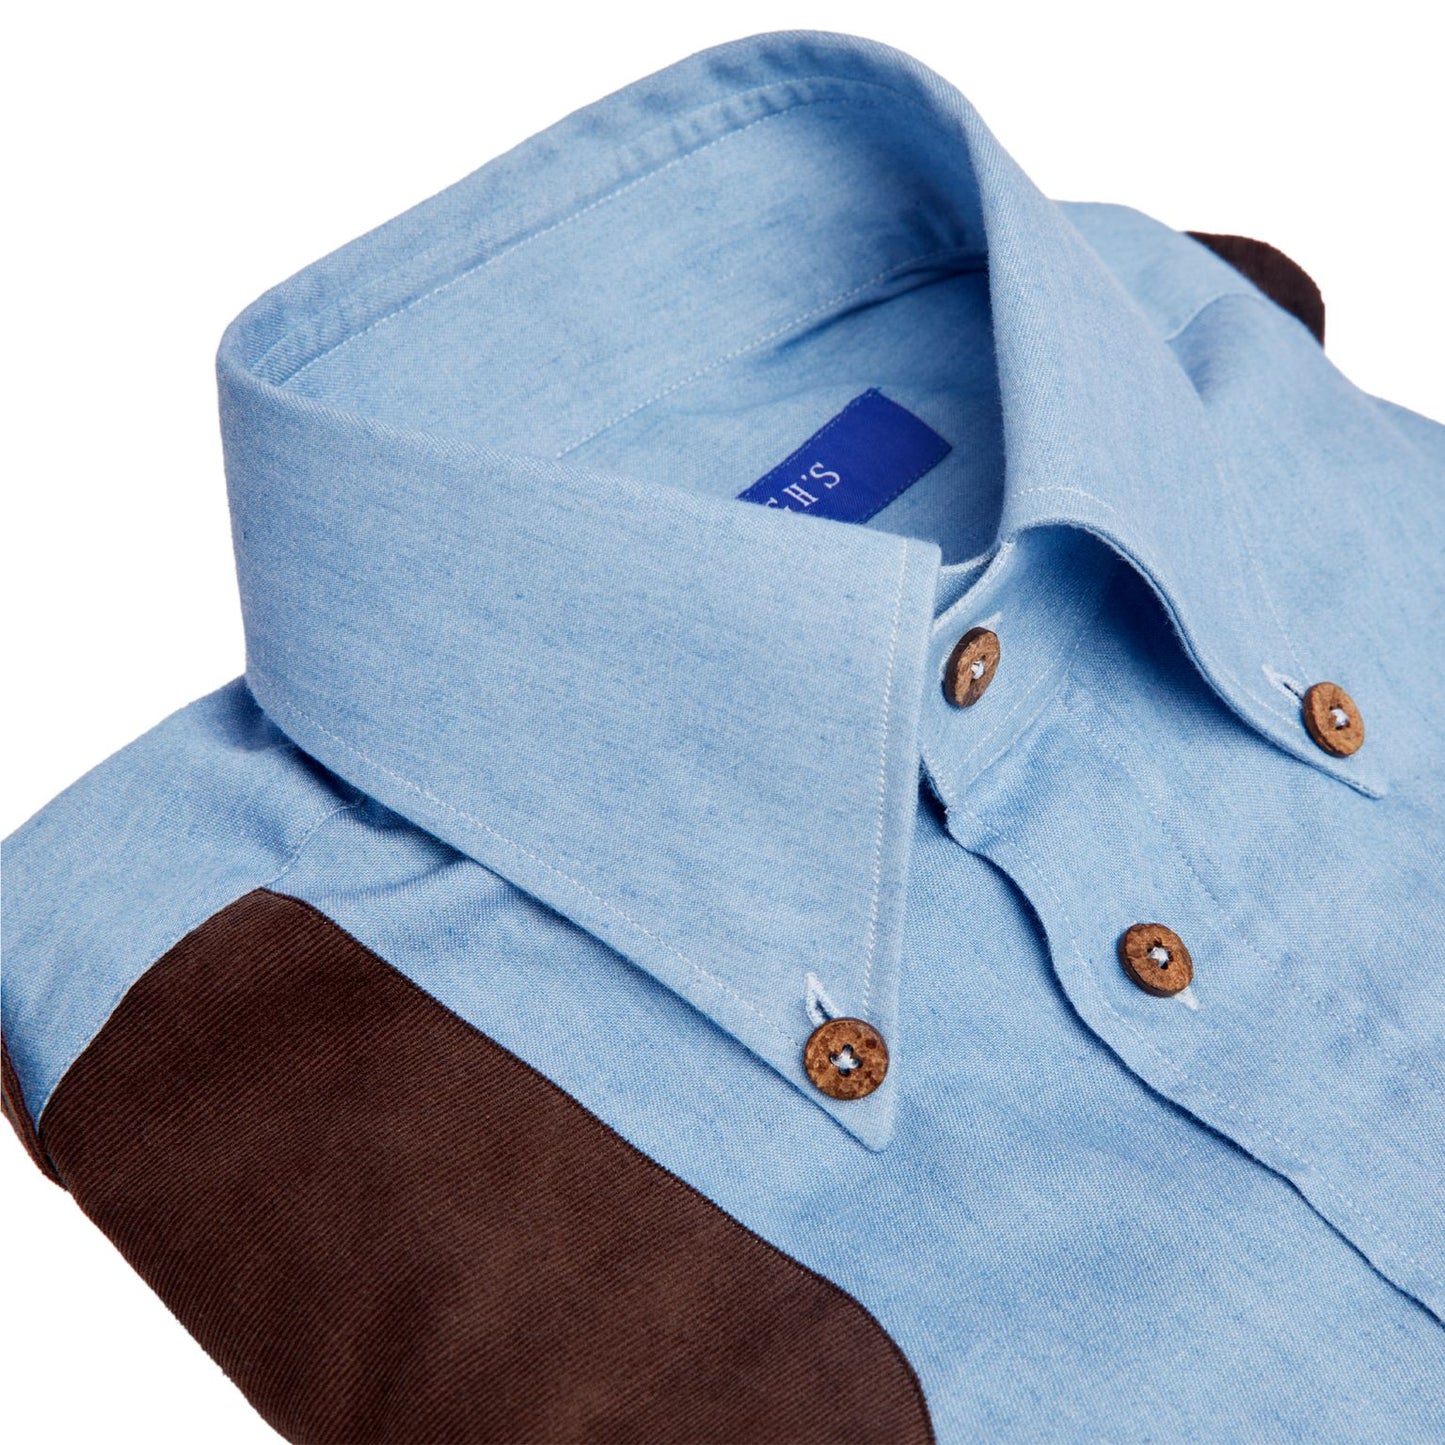 Arno Field Shirt in Blue